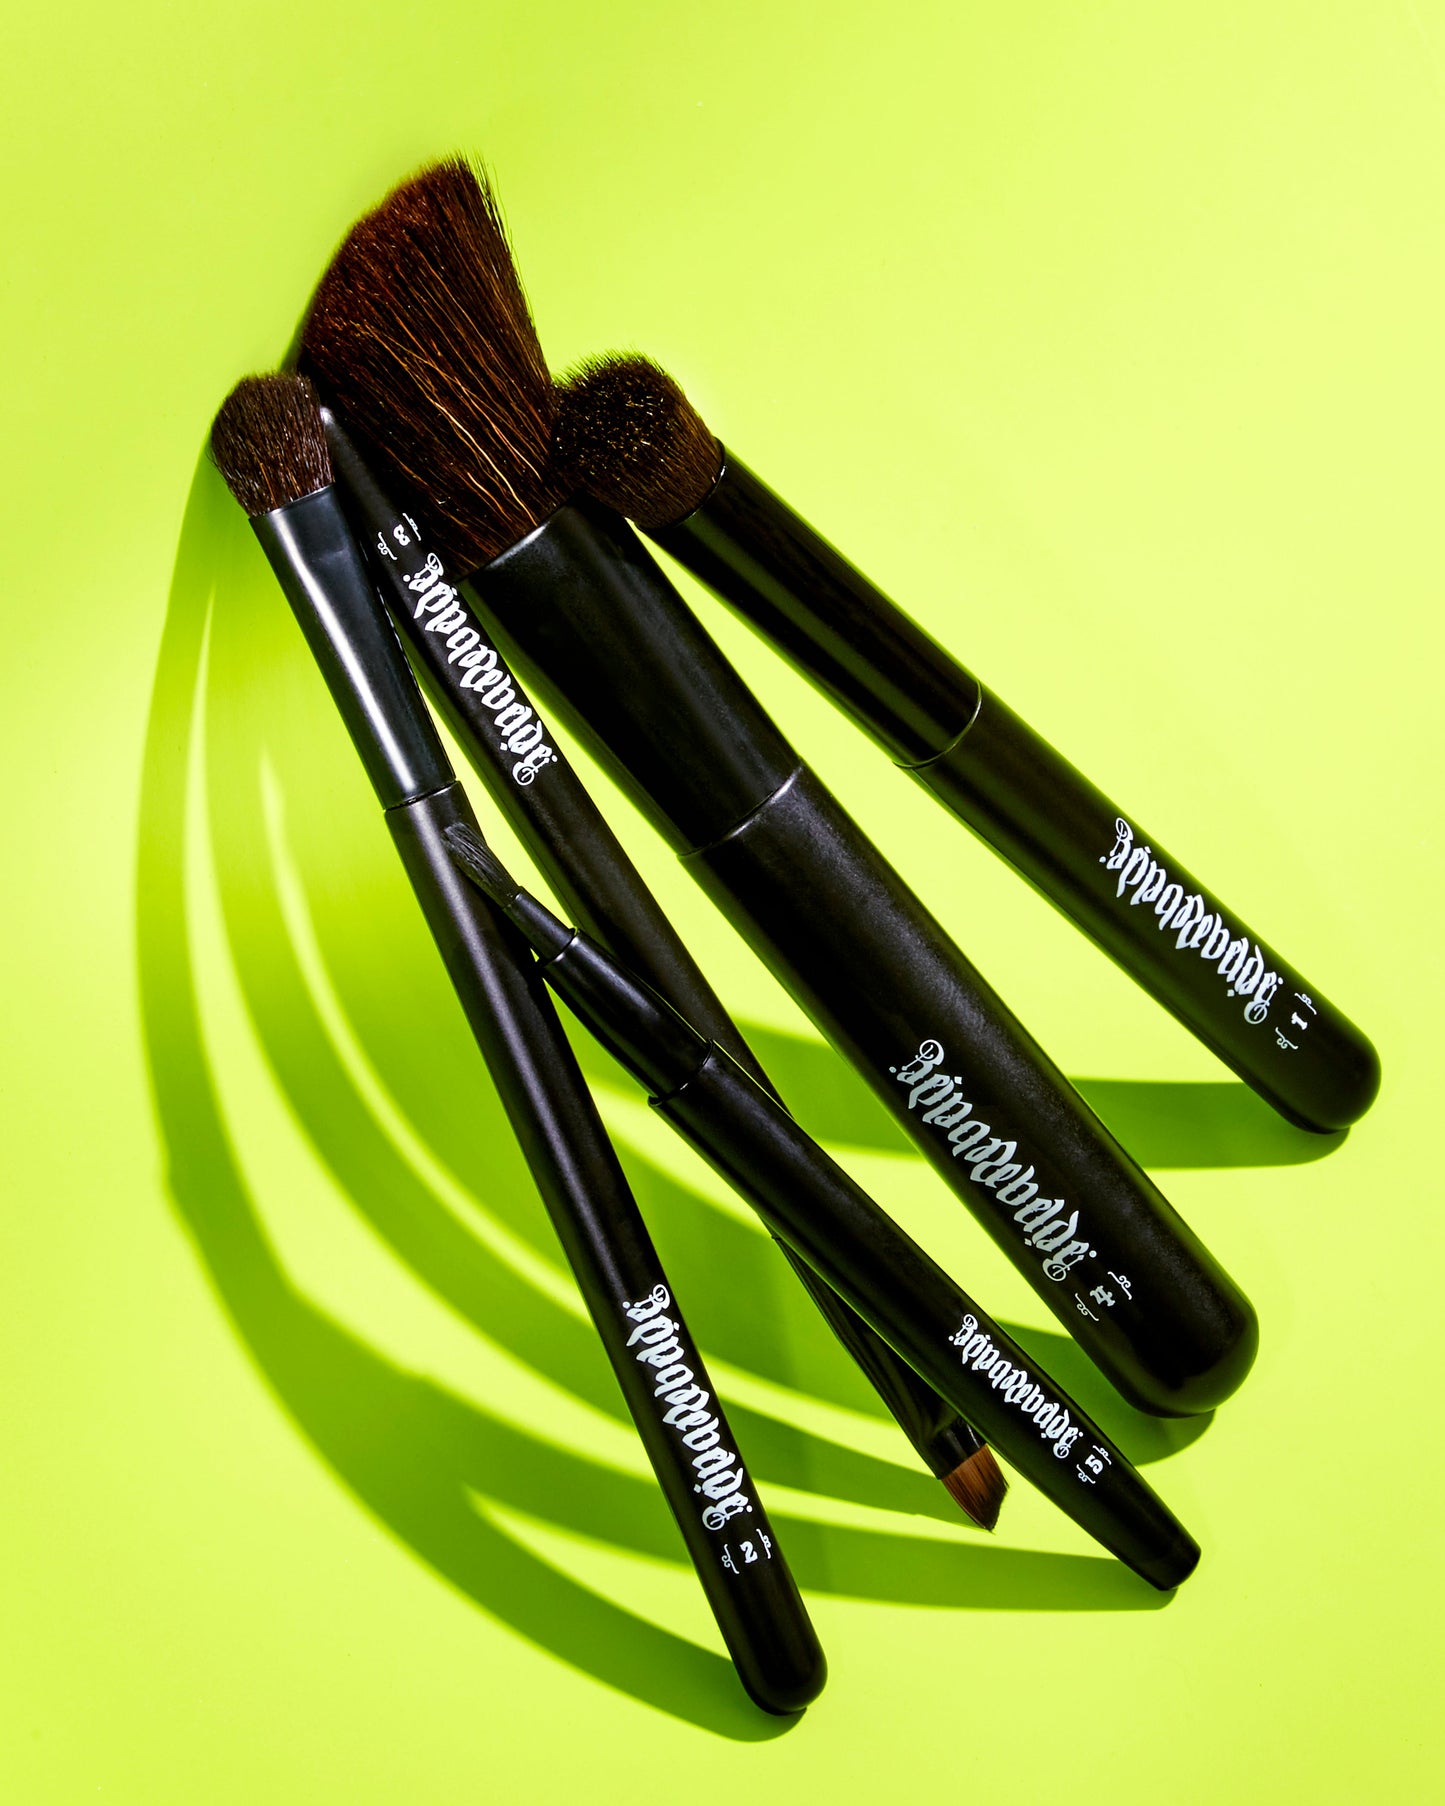 Reina Rebelde makeup brush set